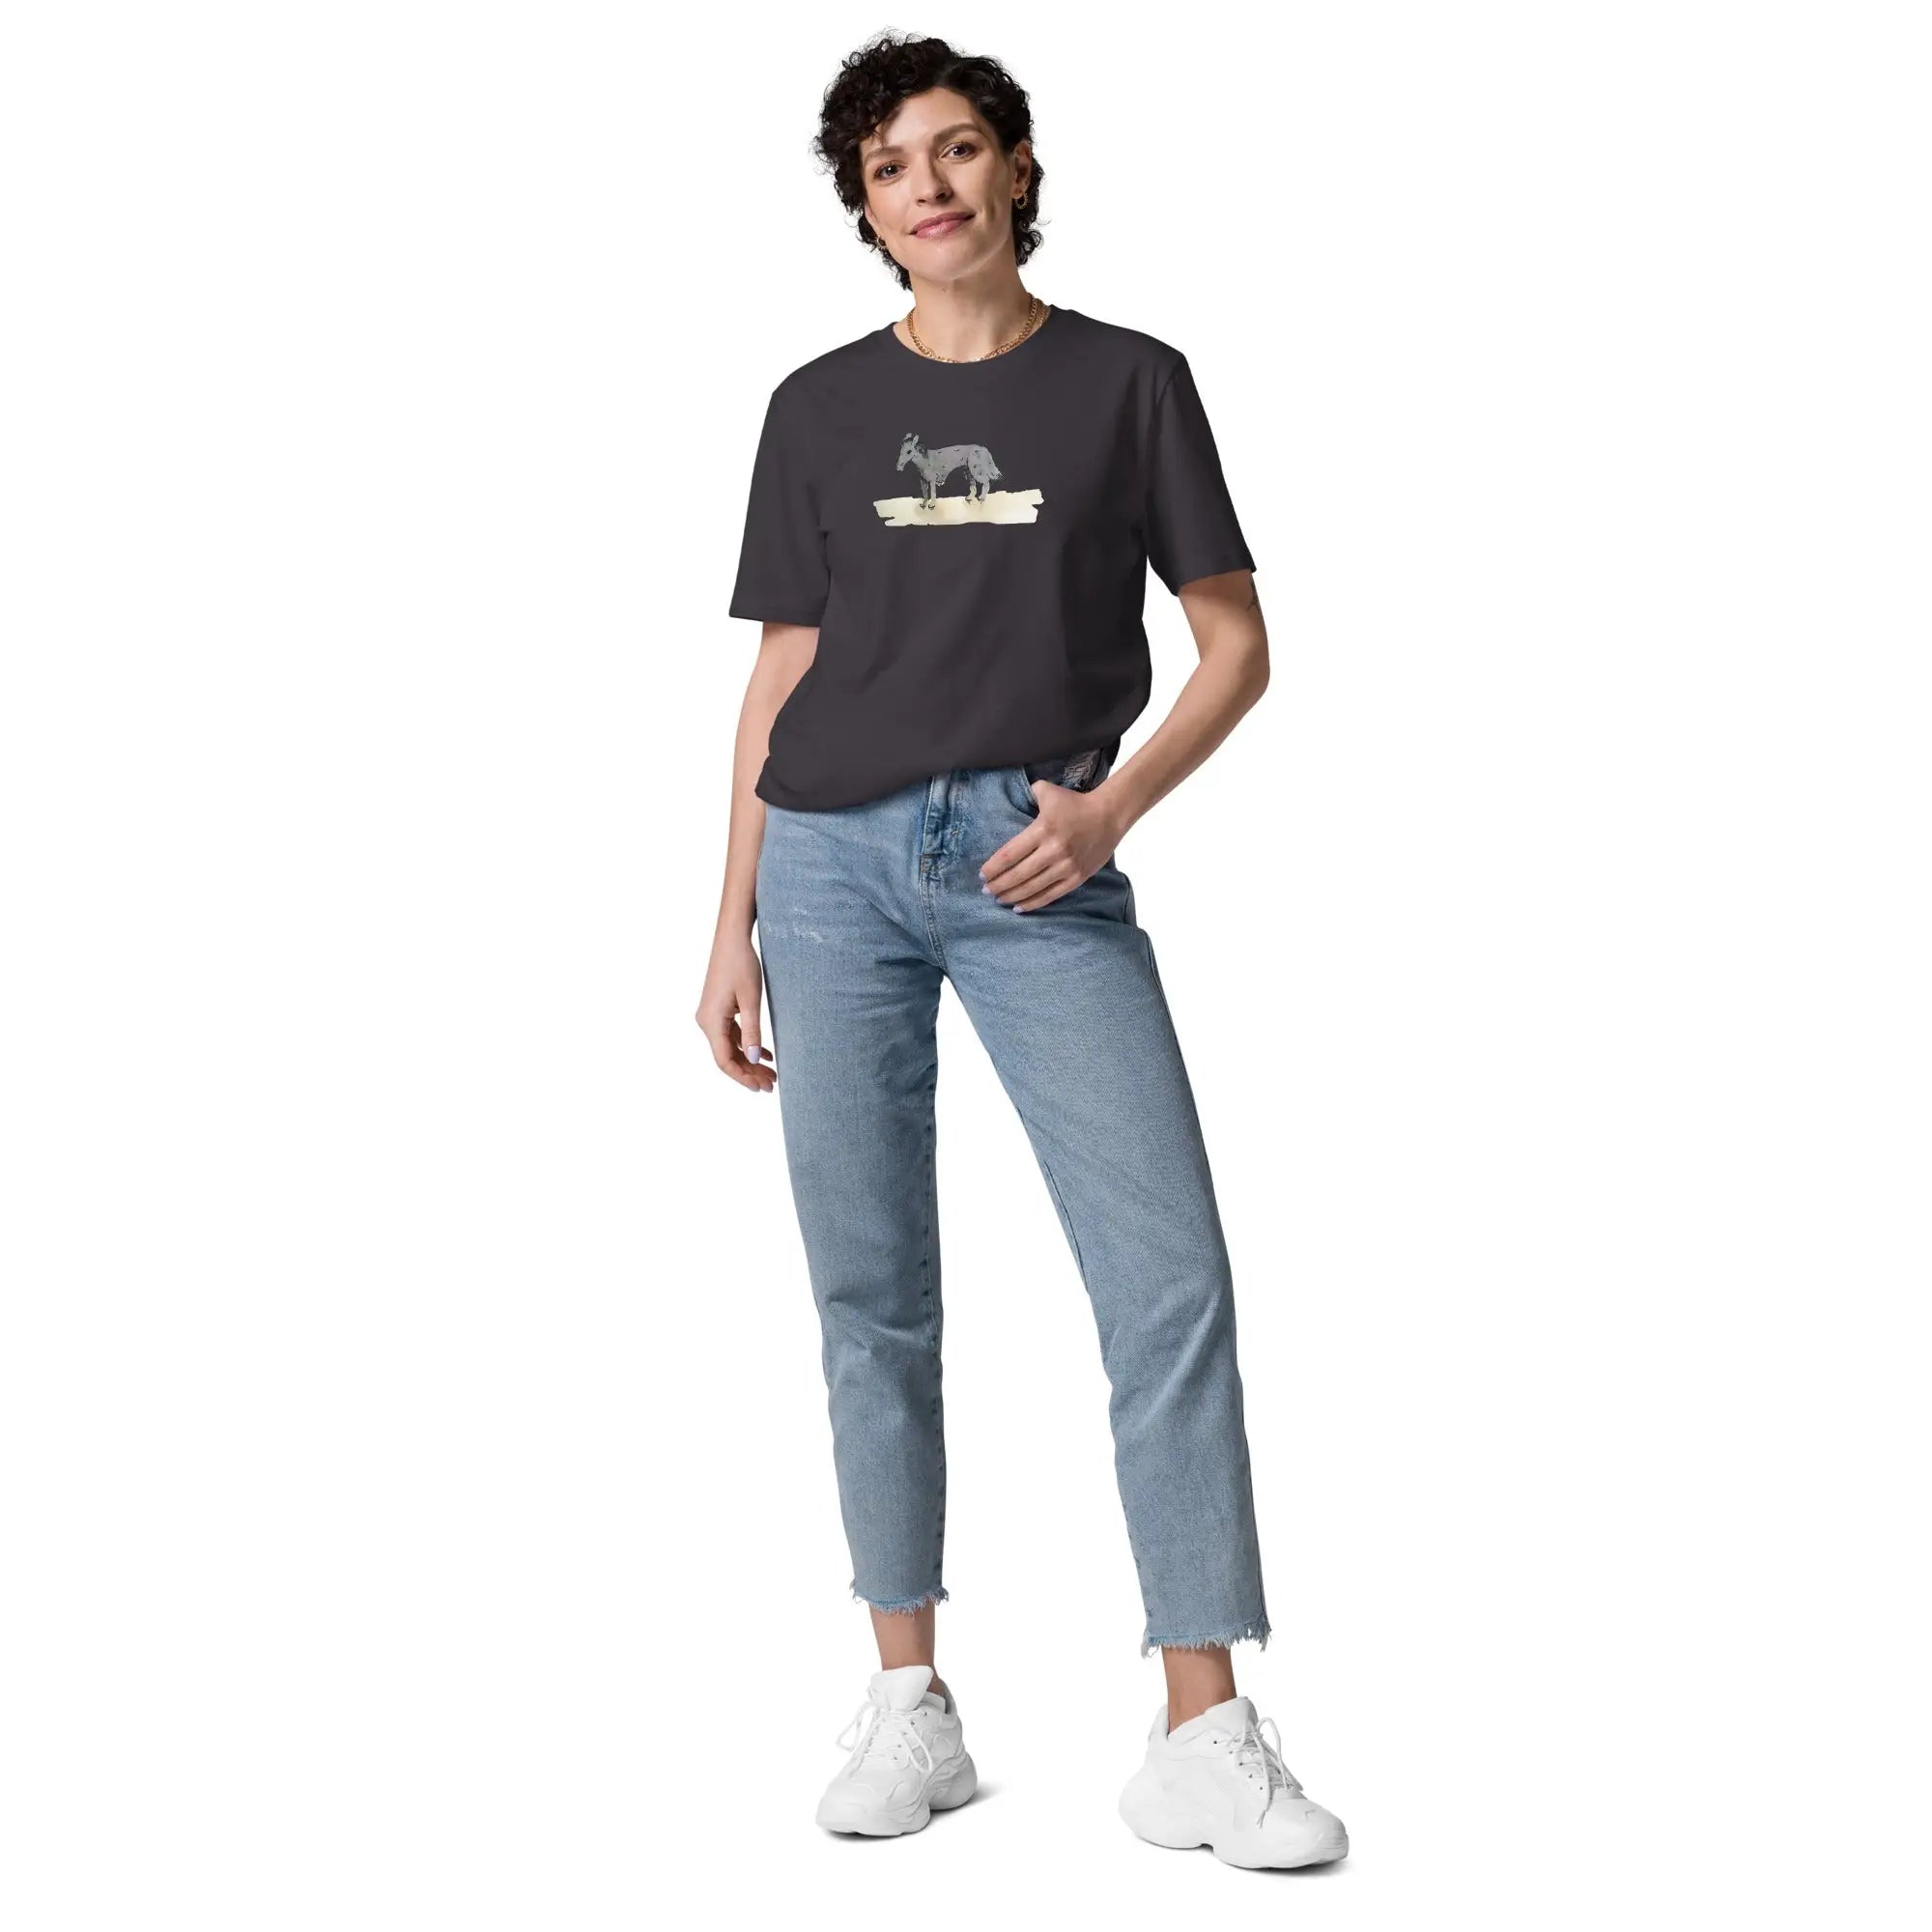 Organic Cotton T-Shirt | Donkeydog: Woman wearing black t-shirt and jeans